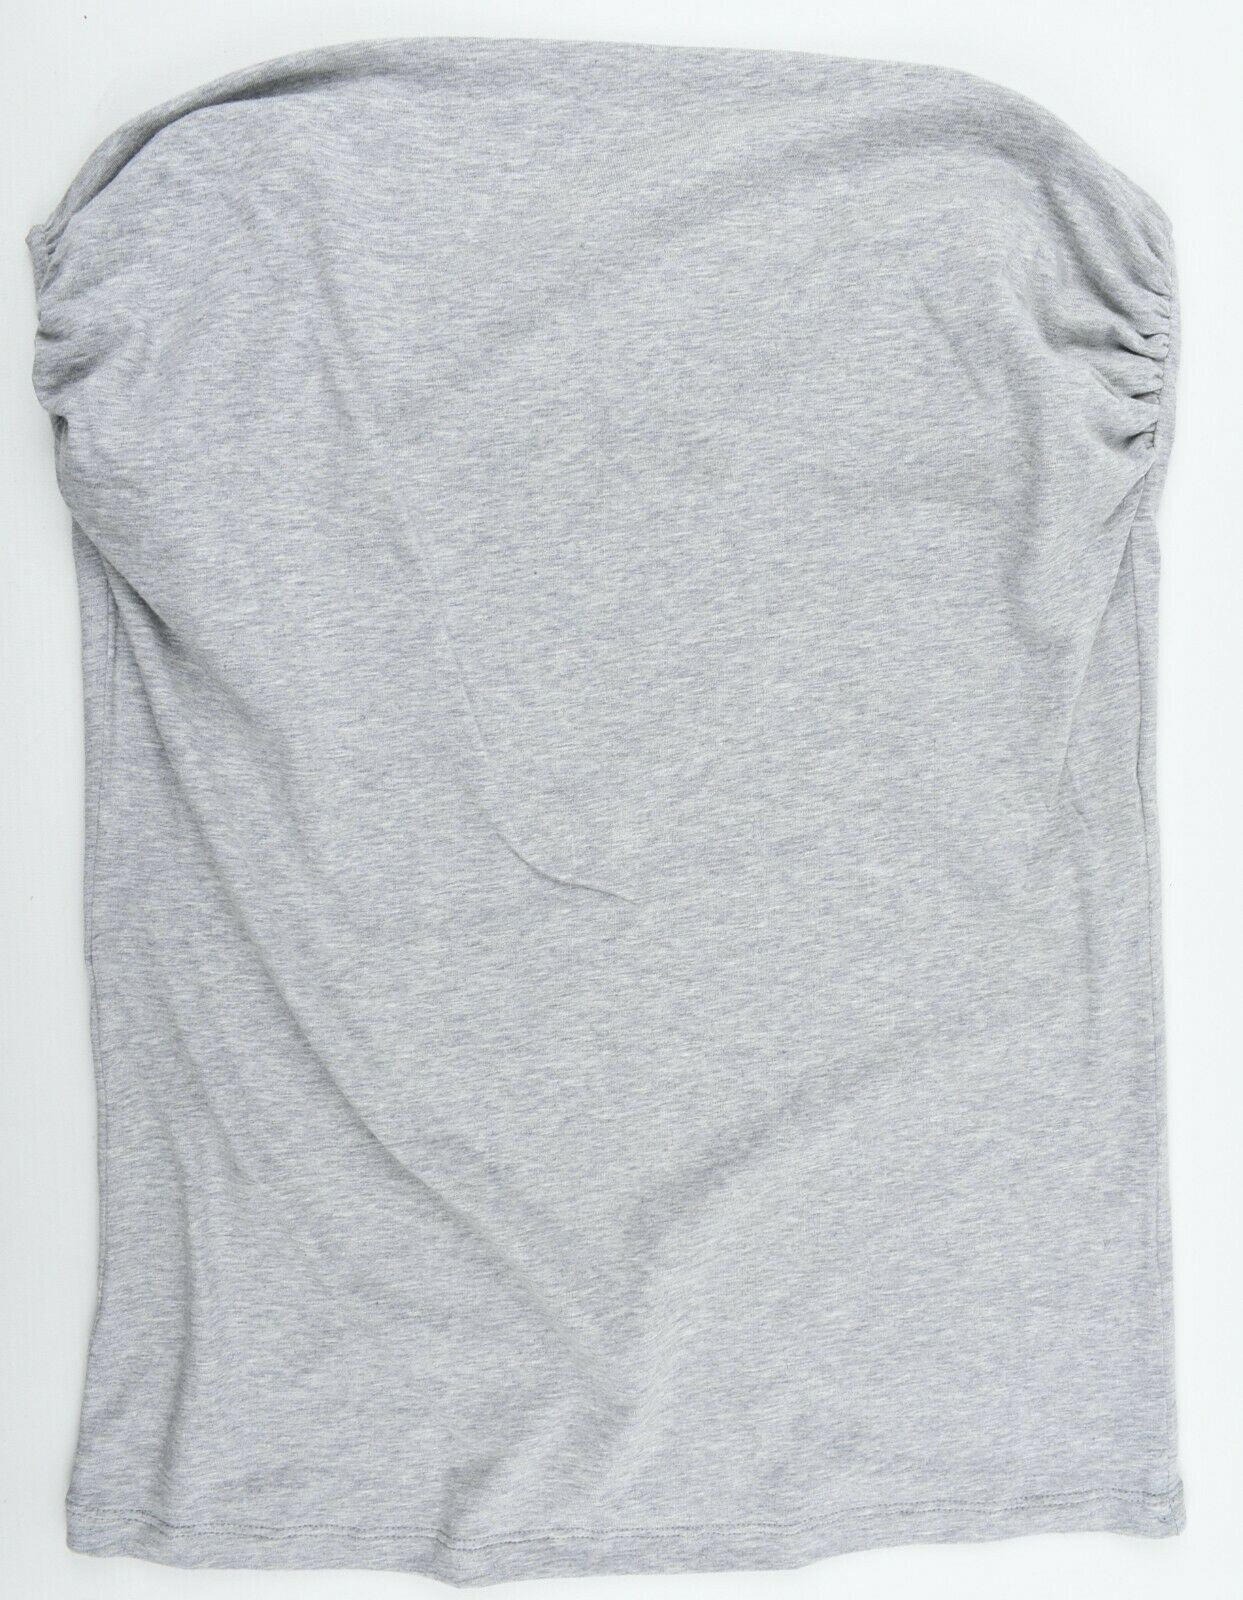 BRUNELLO CUCINELLI Women's Sleeveless Top, Grey, XXL / size UK 20